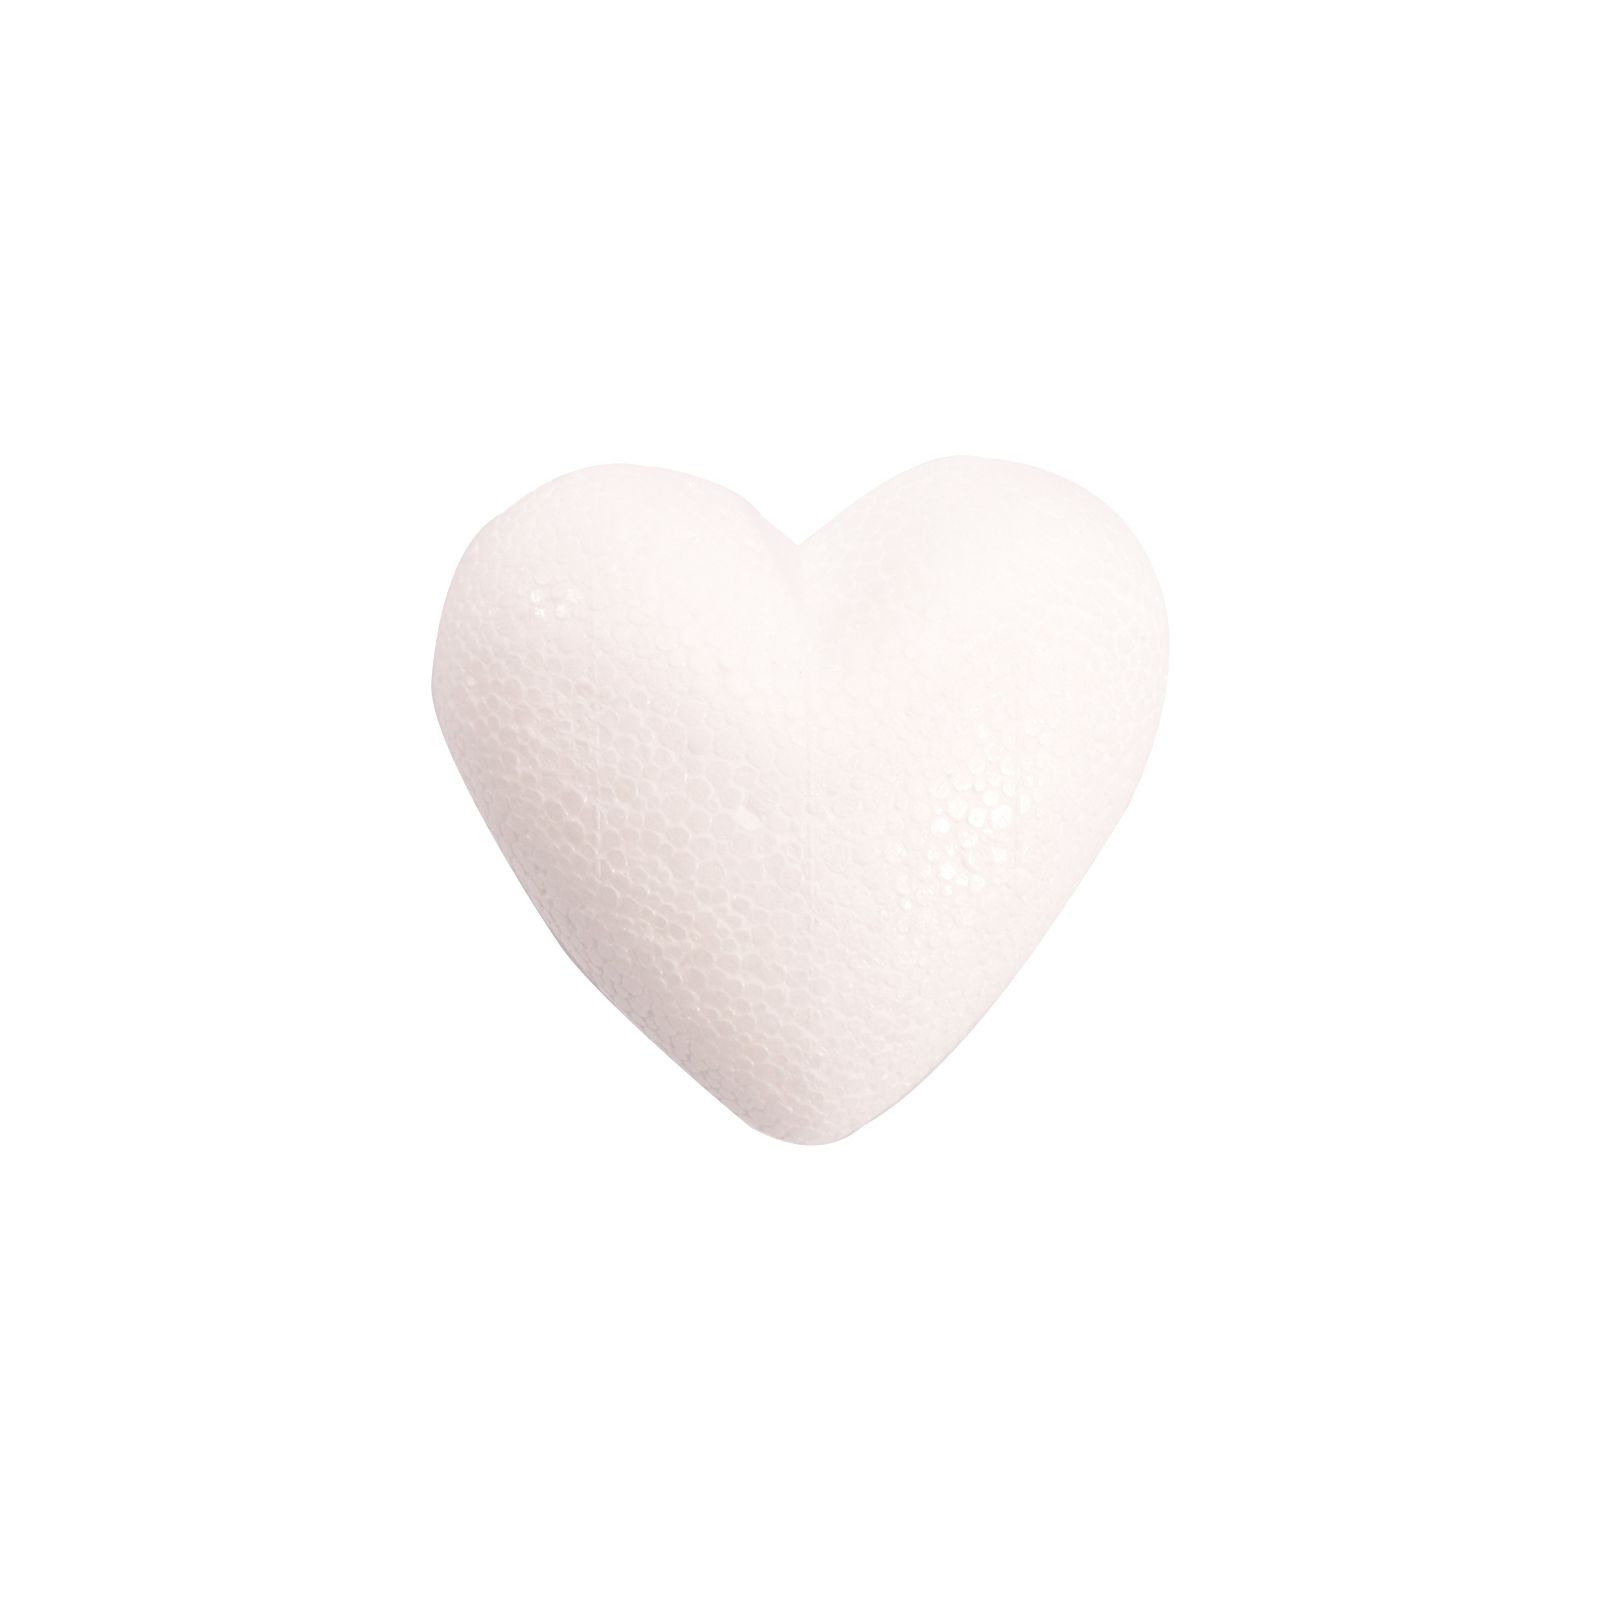 Vaessen Creative • Styrofoam heart 2"